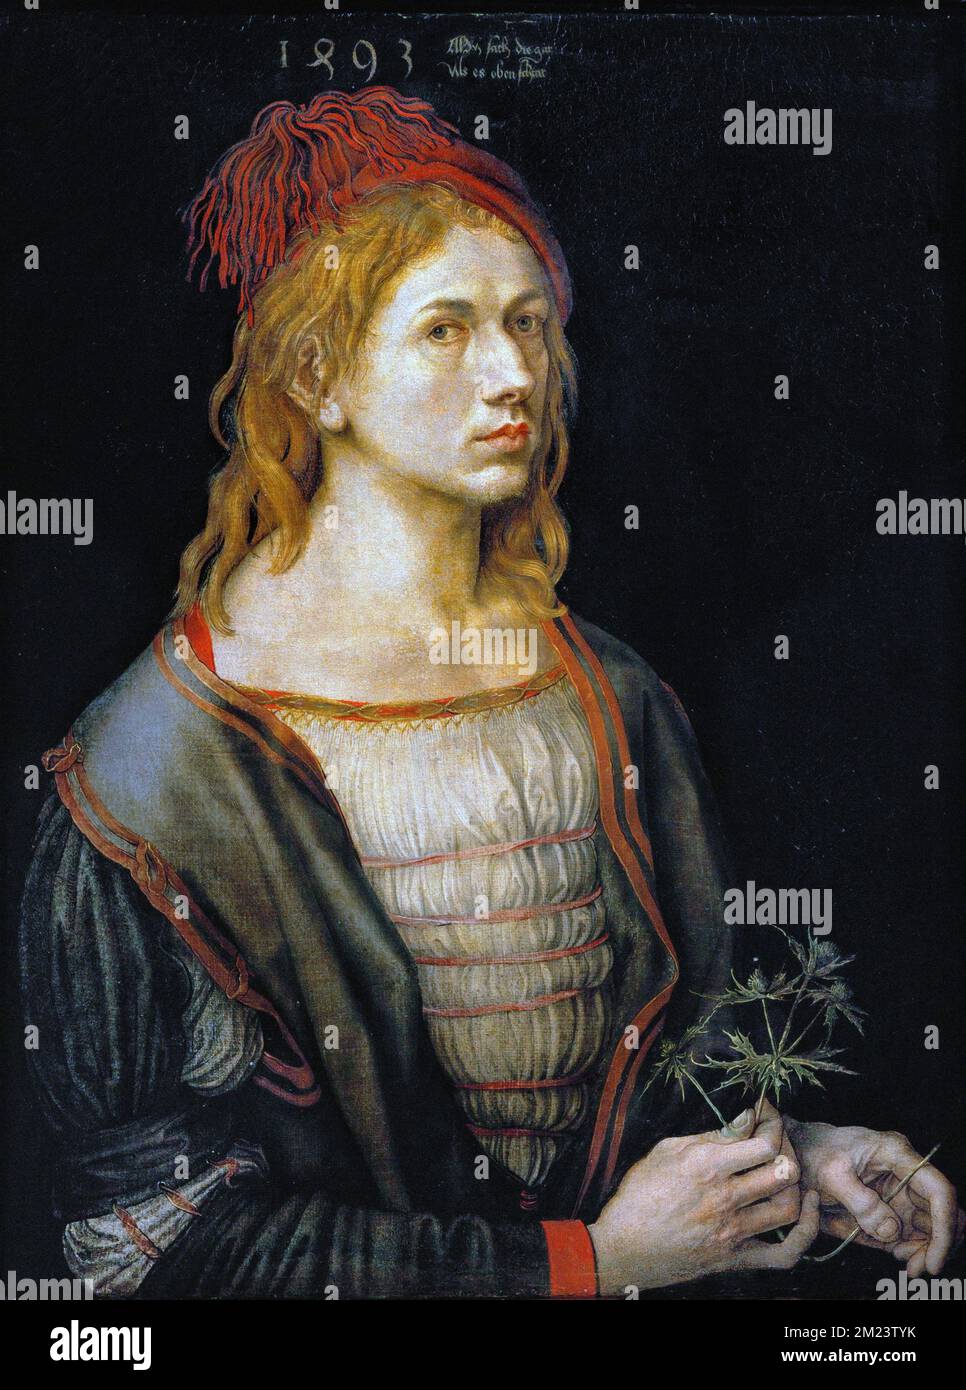 Autoritratto (1493) di Albrecht Dürer, dipinto di Albrecht Dürer, Albrecht Dürer (1471 – 1528), pittore tedesco Foto Stock